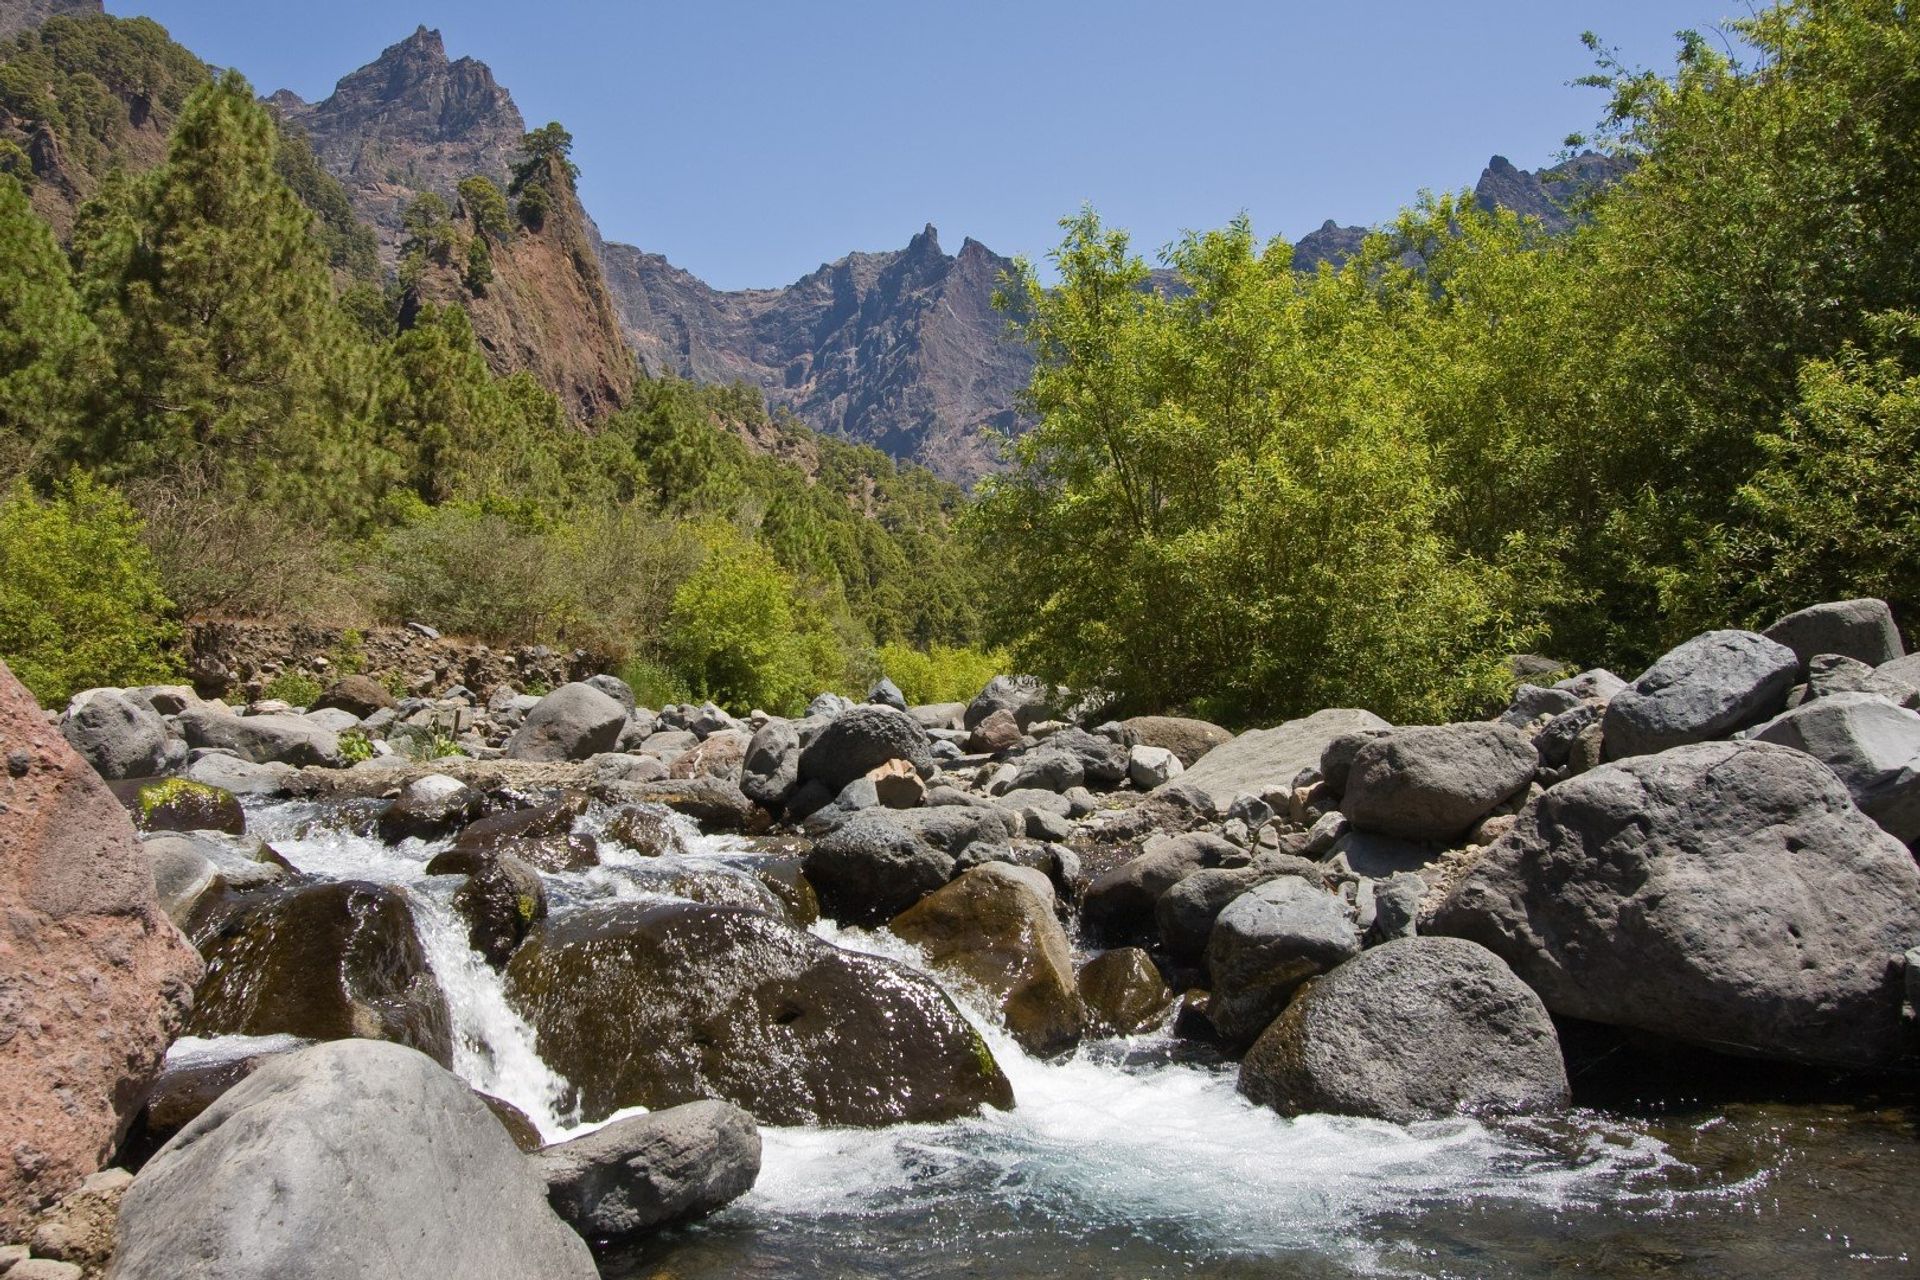 Outdoor enthusiasts will love a hike around Caldera de Taburiente National Park